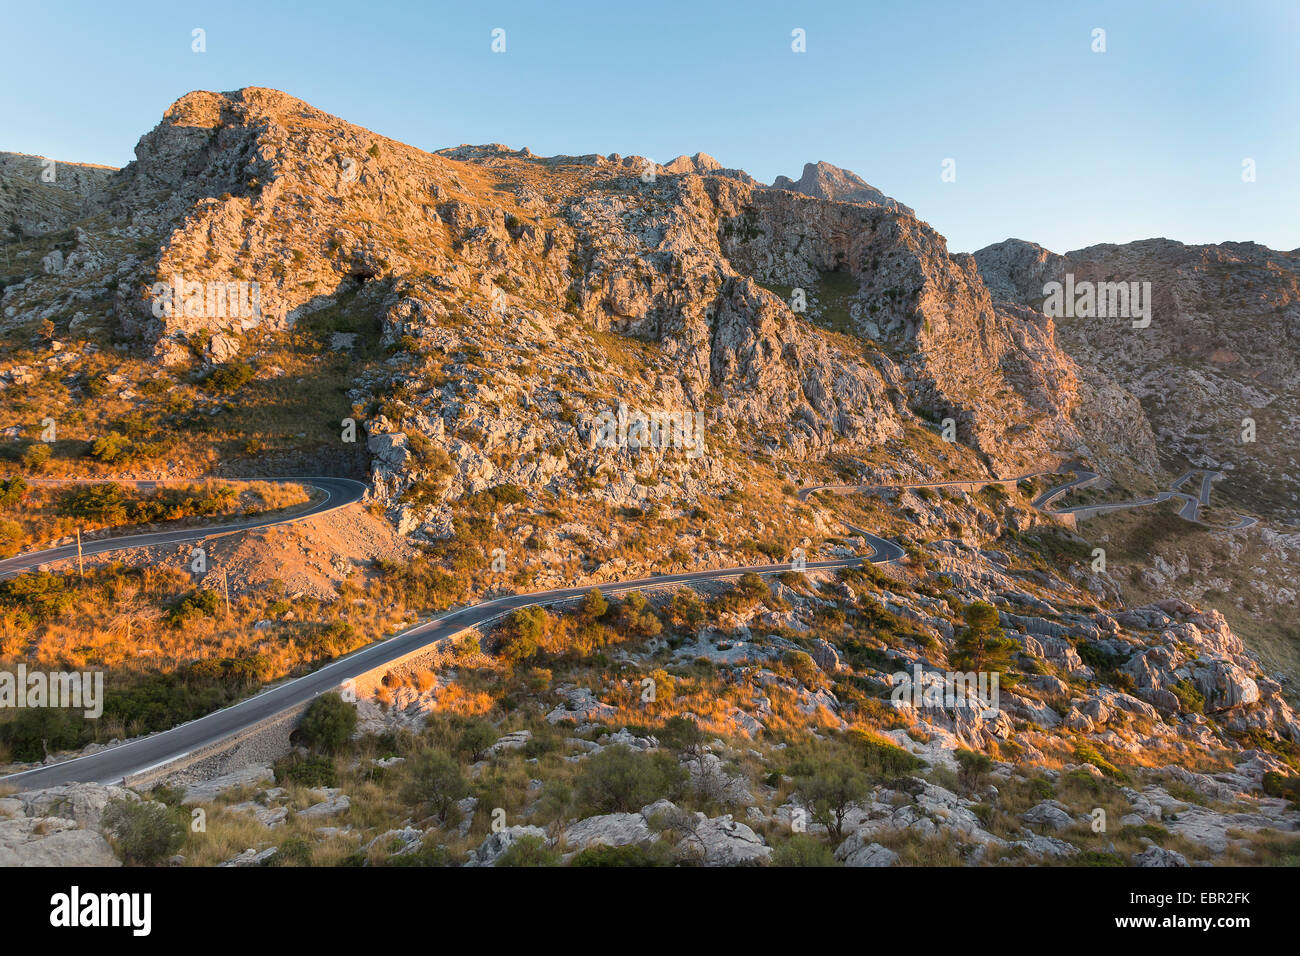 Winding road to Cala de Sa calobra, Serra de Tramuntana (Sierra de Tramuntana) Stock Photo